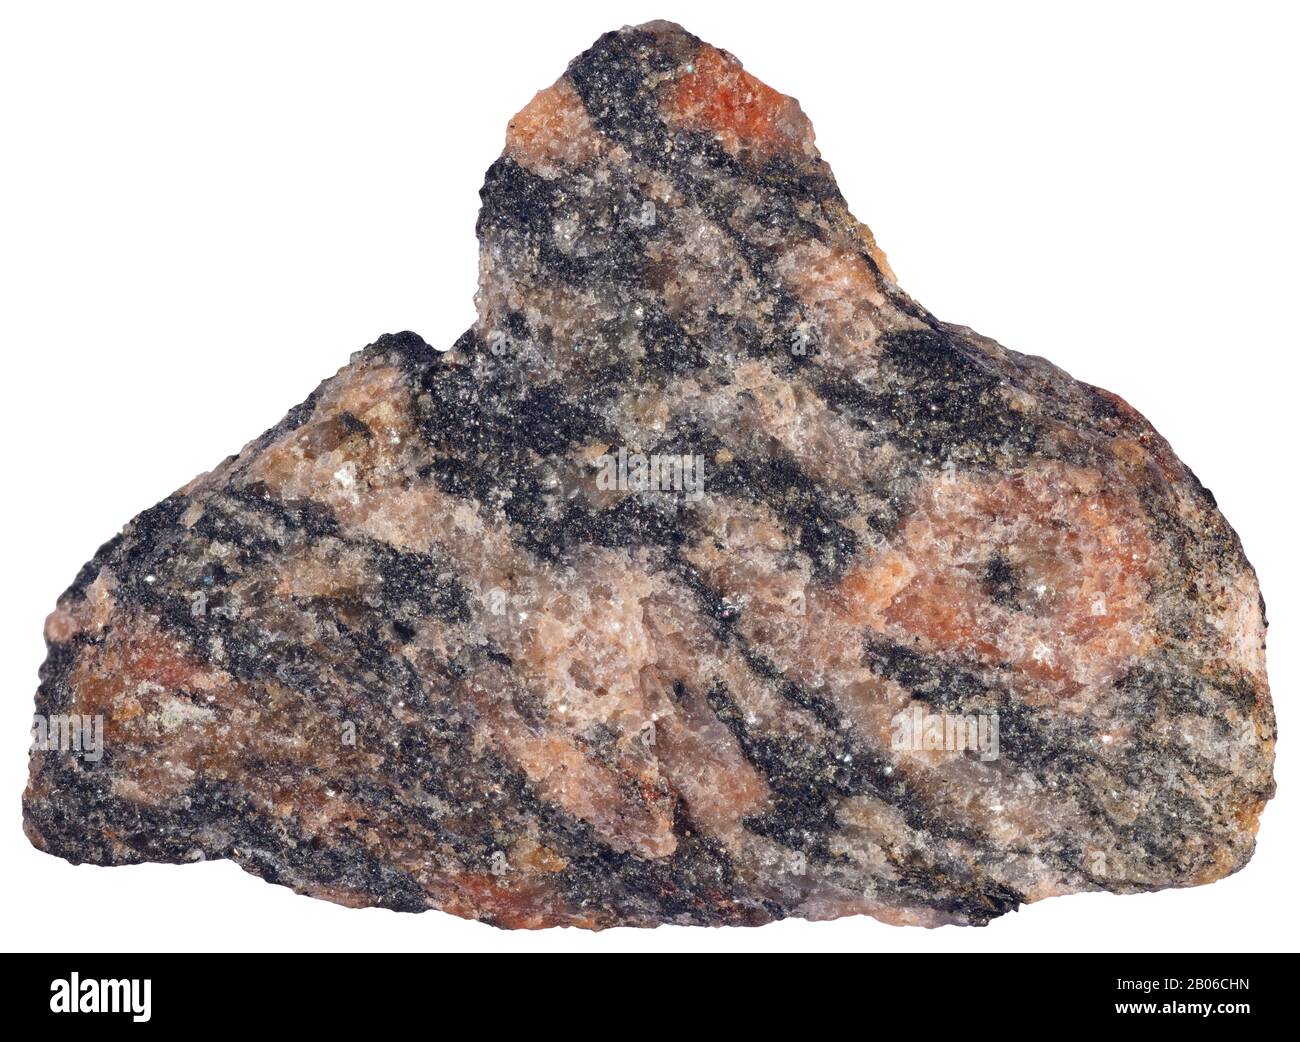 Hornblende Granite, Plutonic, Ottawa A granite containing hornblende, a felsic plutonic rock, generally adamellite or granodiorite, containing an amph Stock Photo